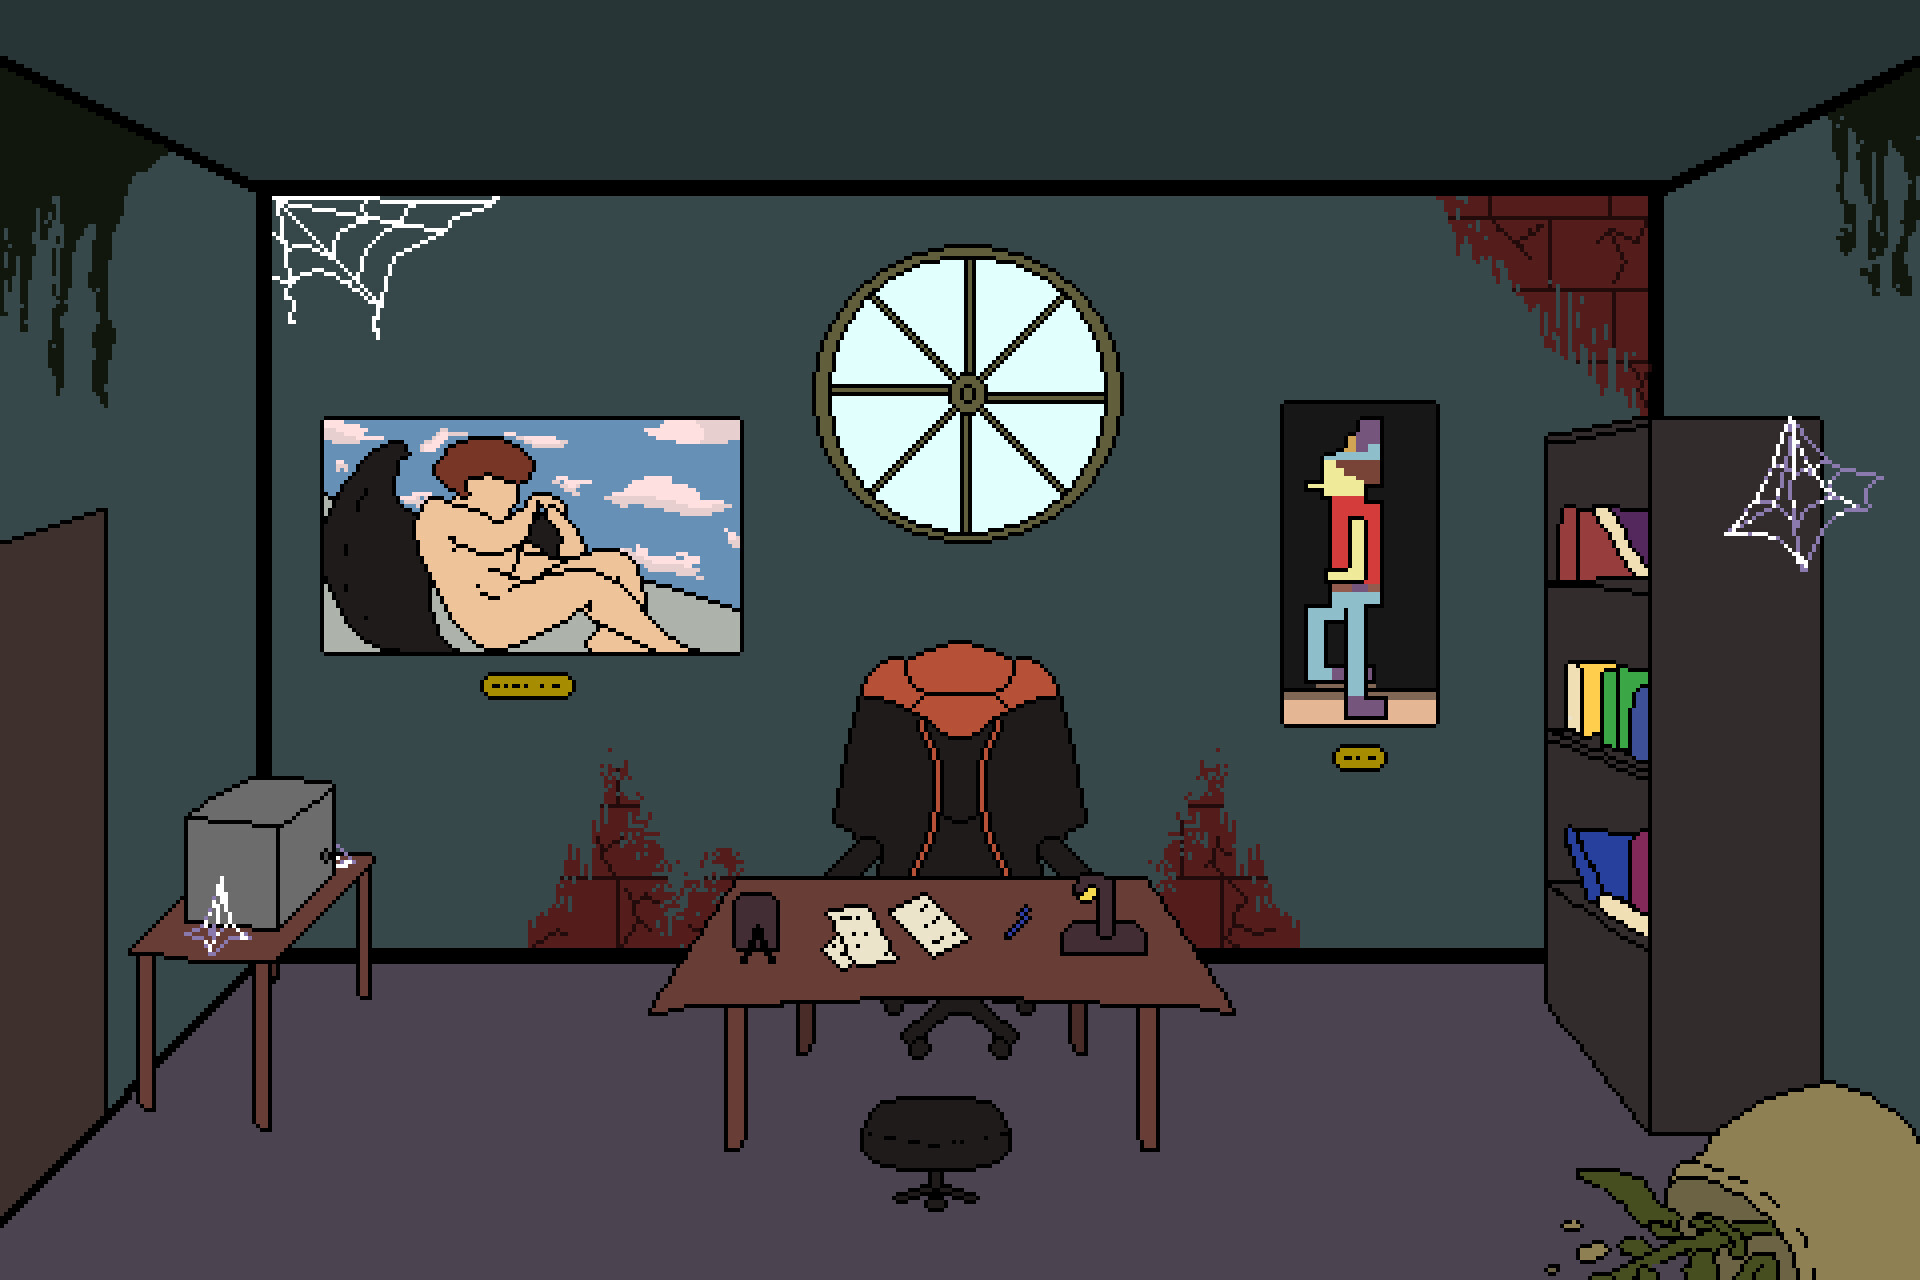 ArtStation - Pixel Art Horror Game Backgrounds